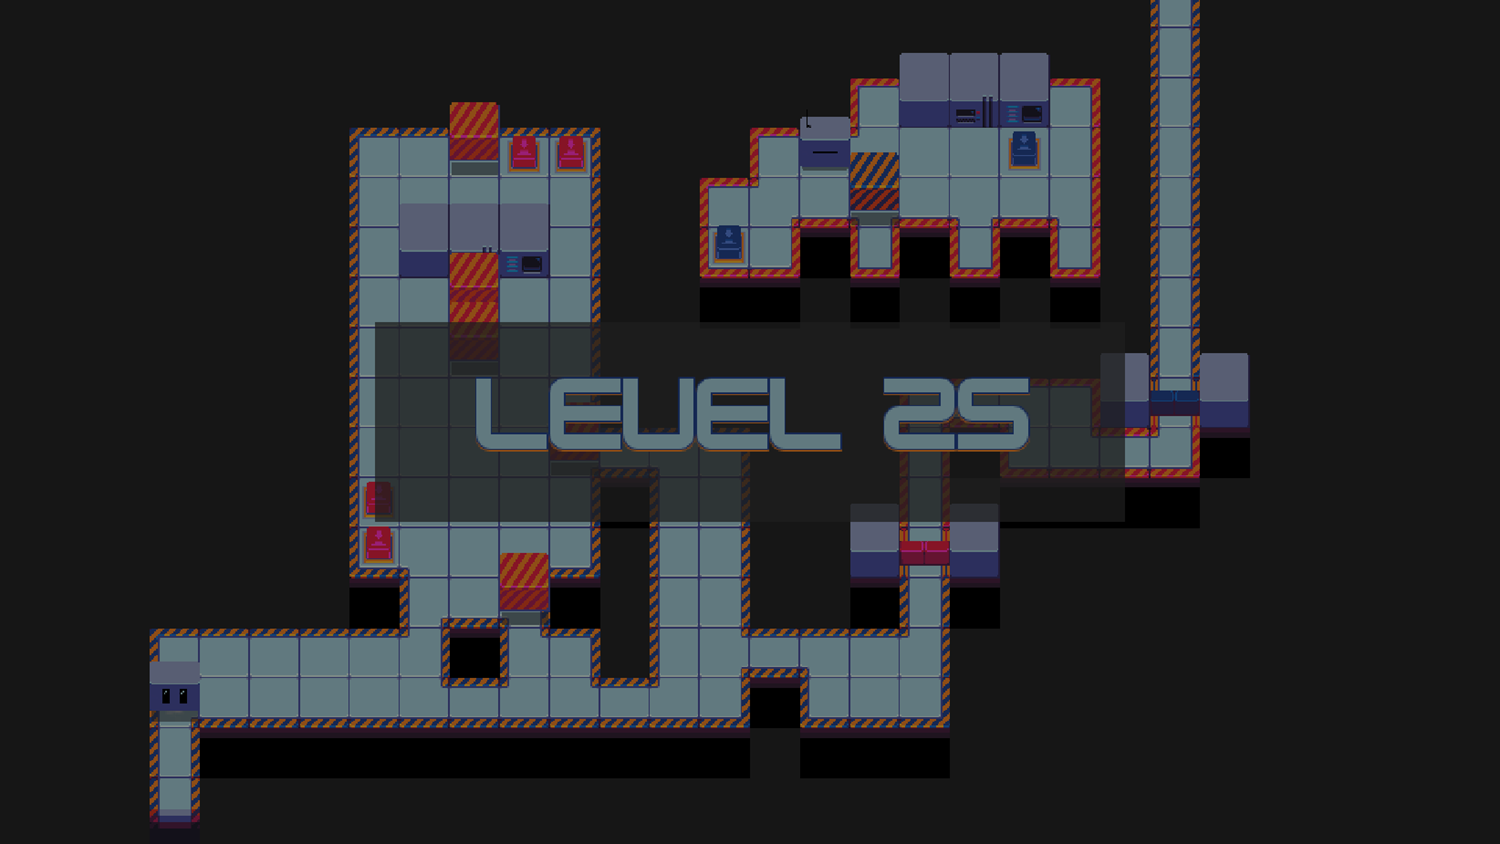 Robot Start Game Level 25 Screenshot.